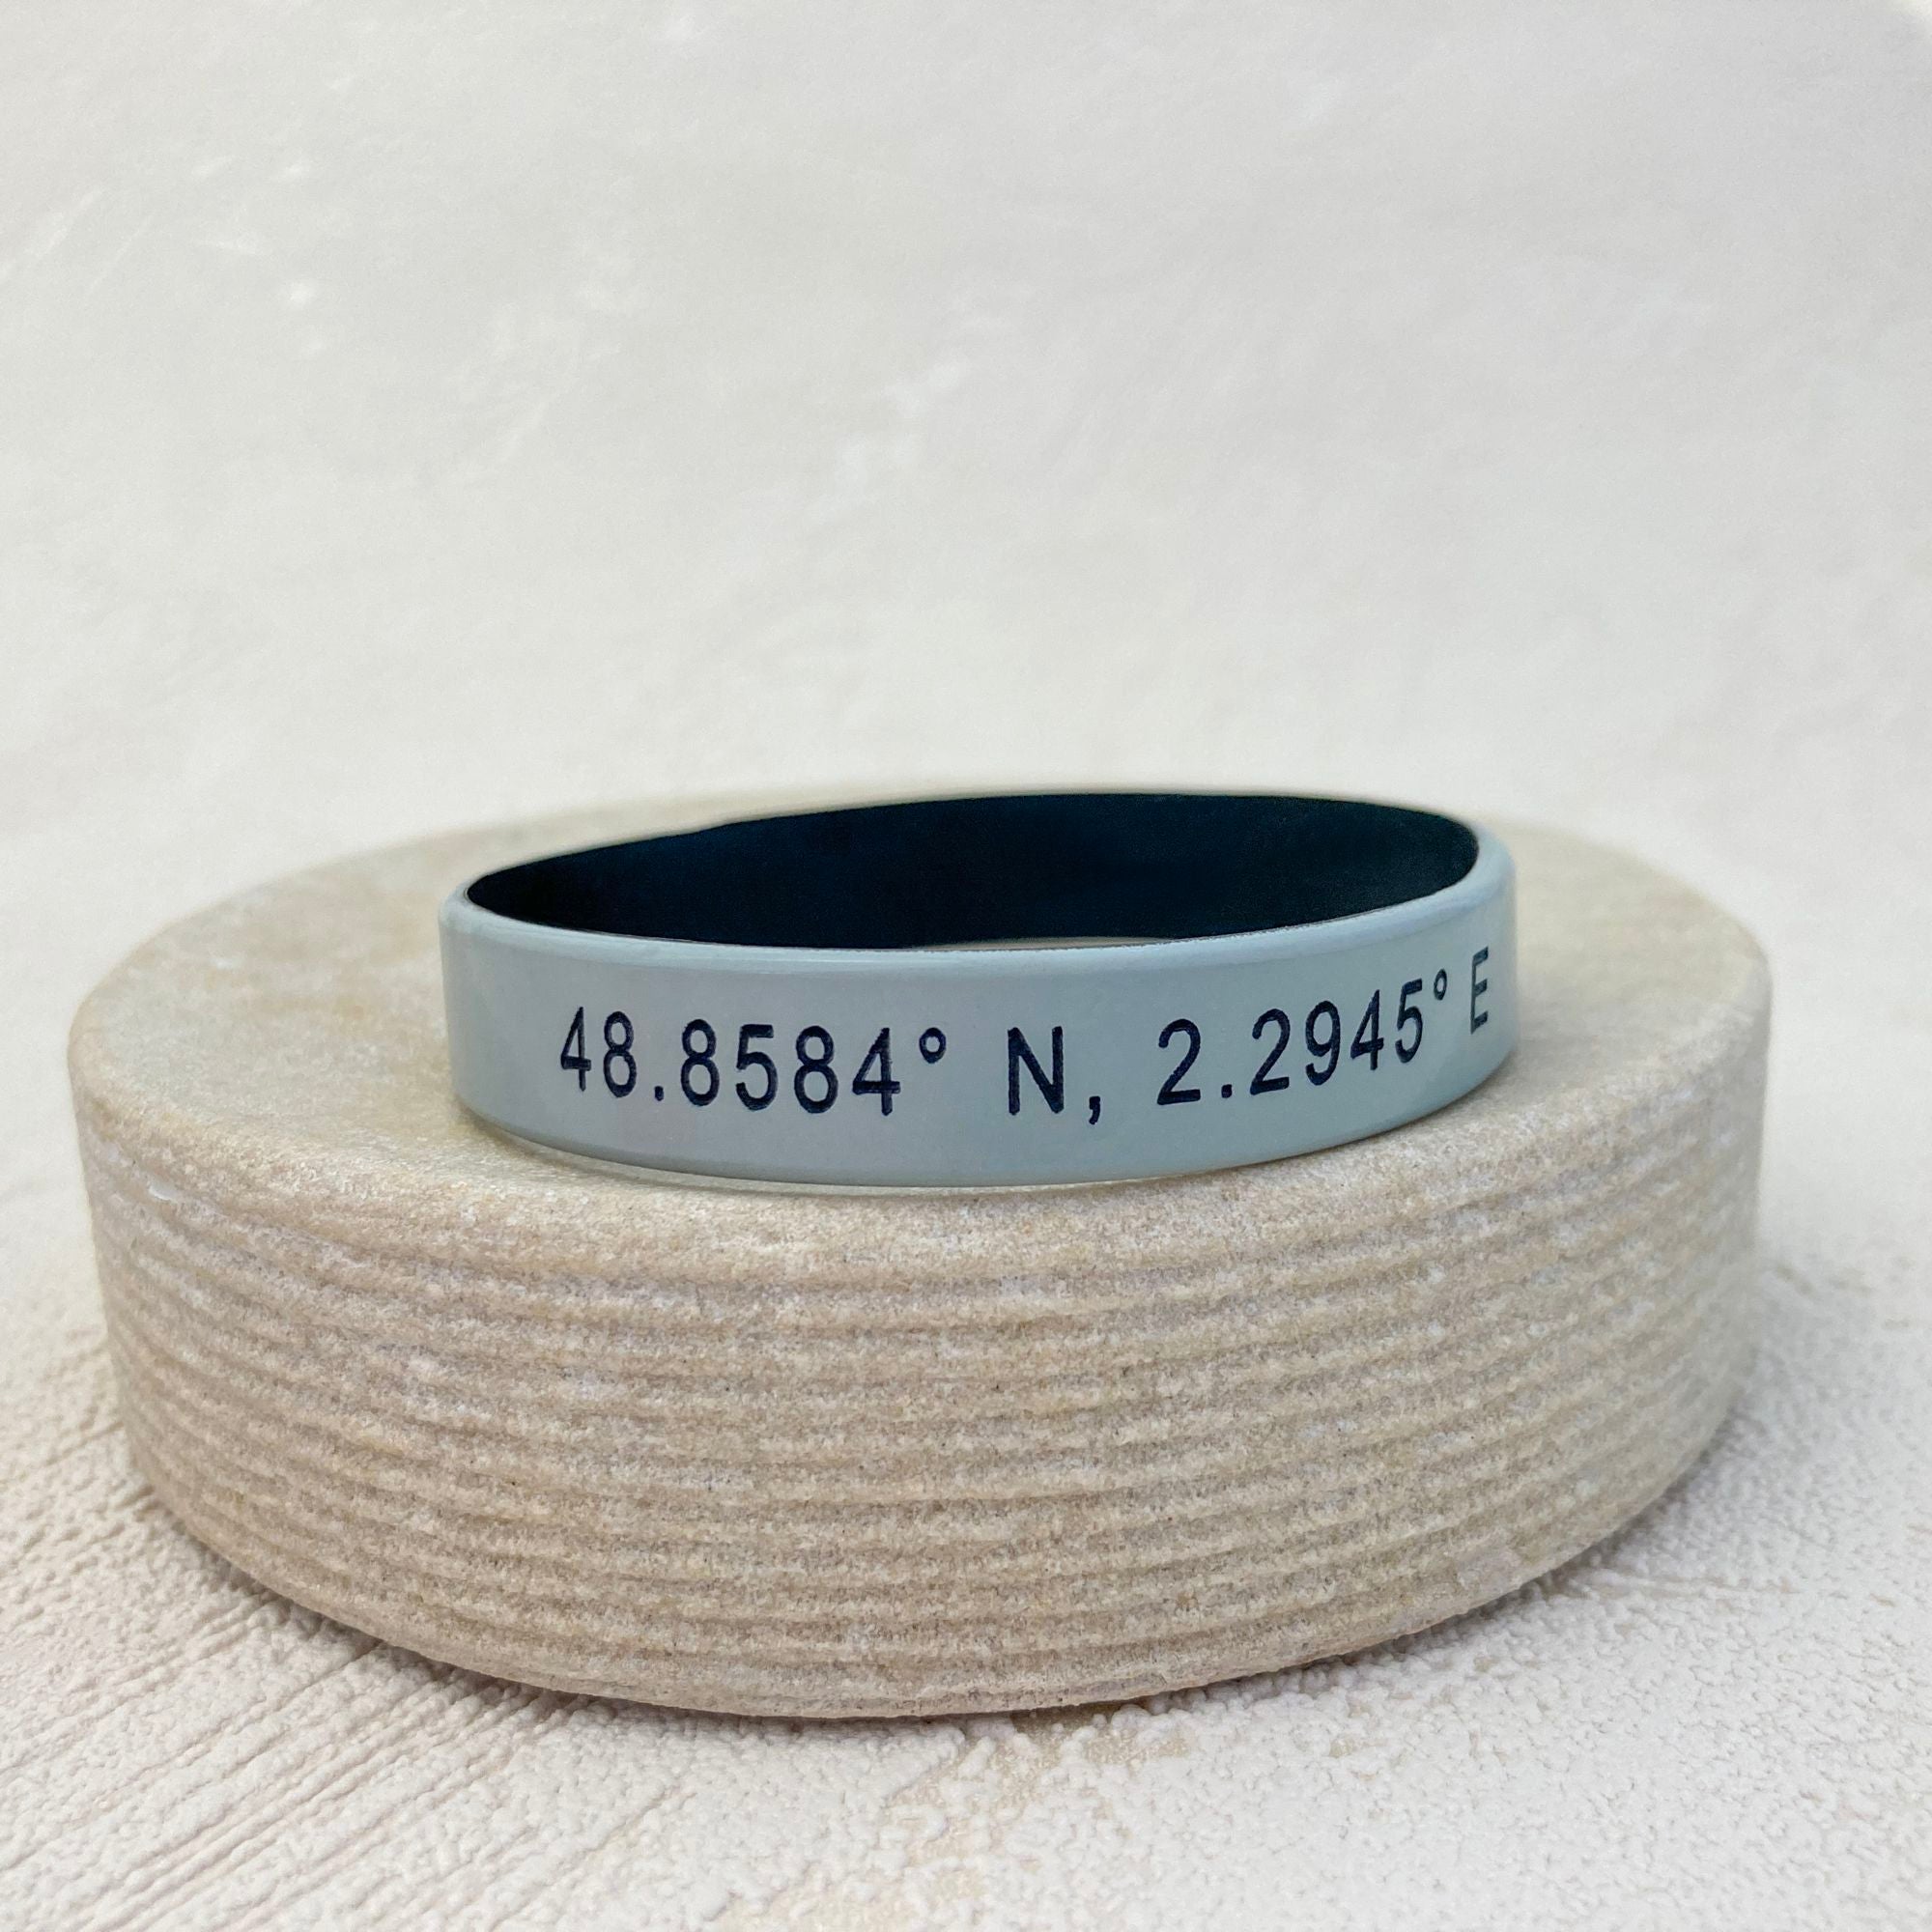 grid coordinates personalised wristband grey gray black